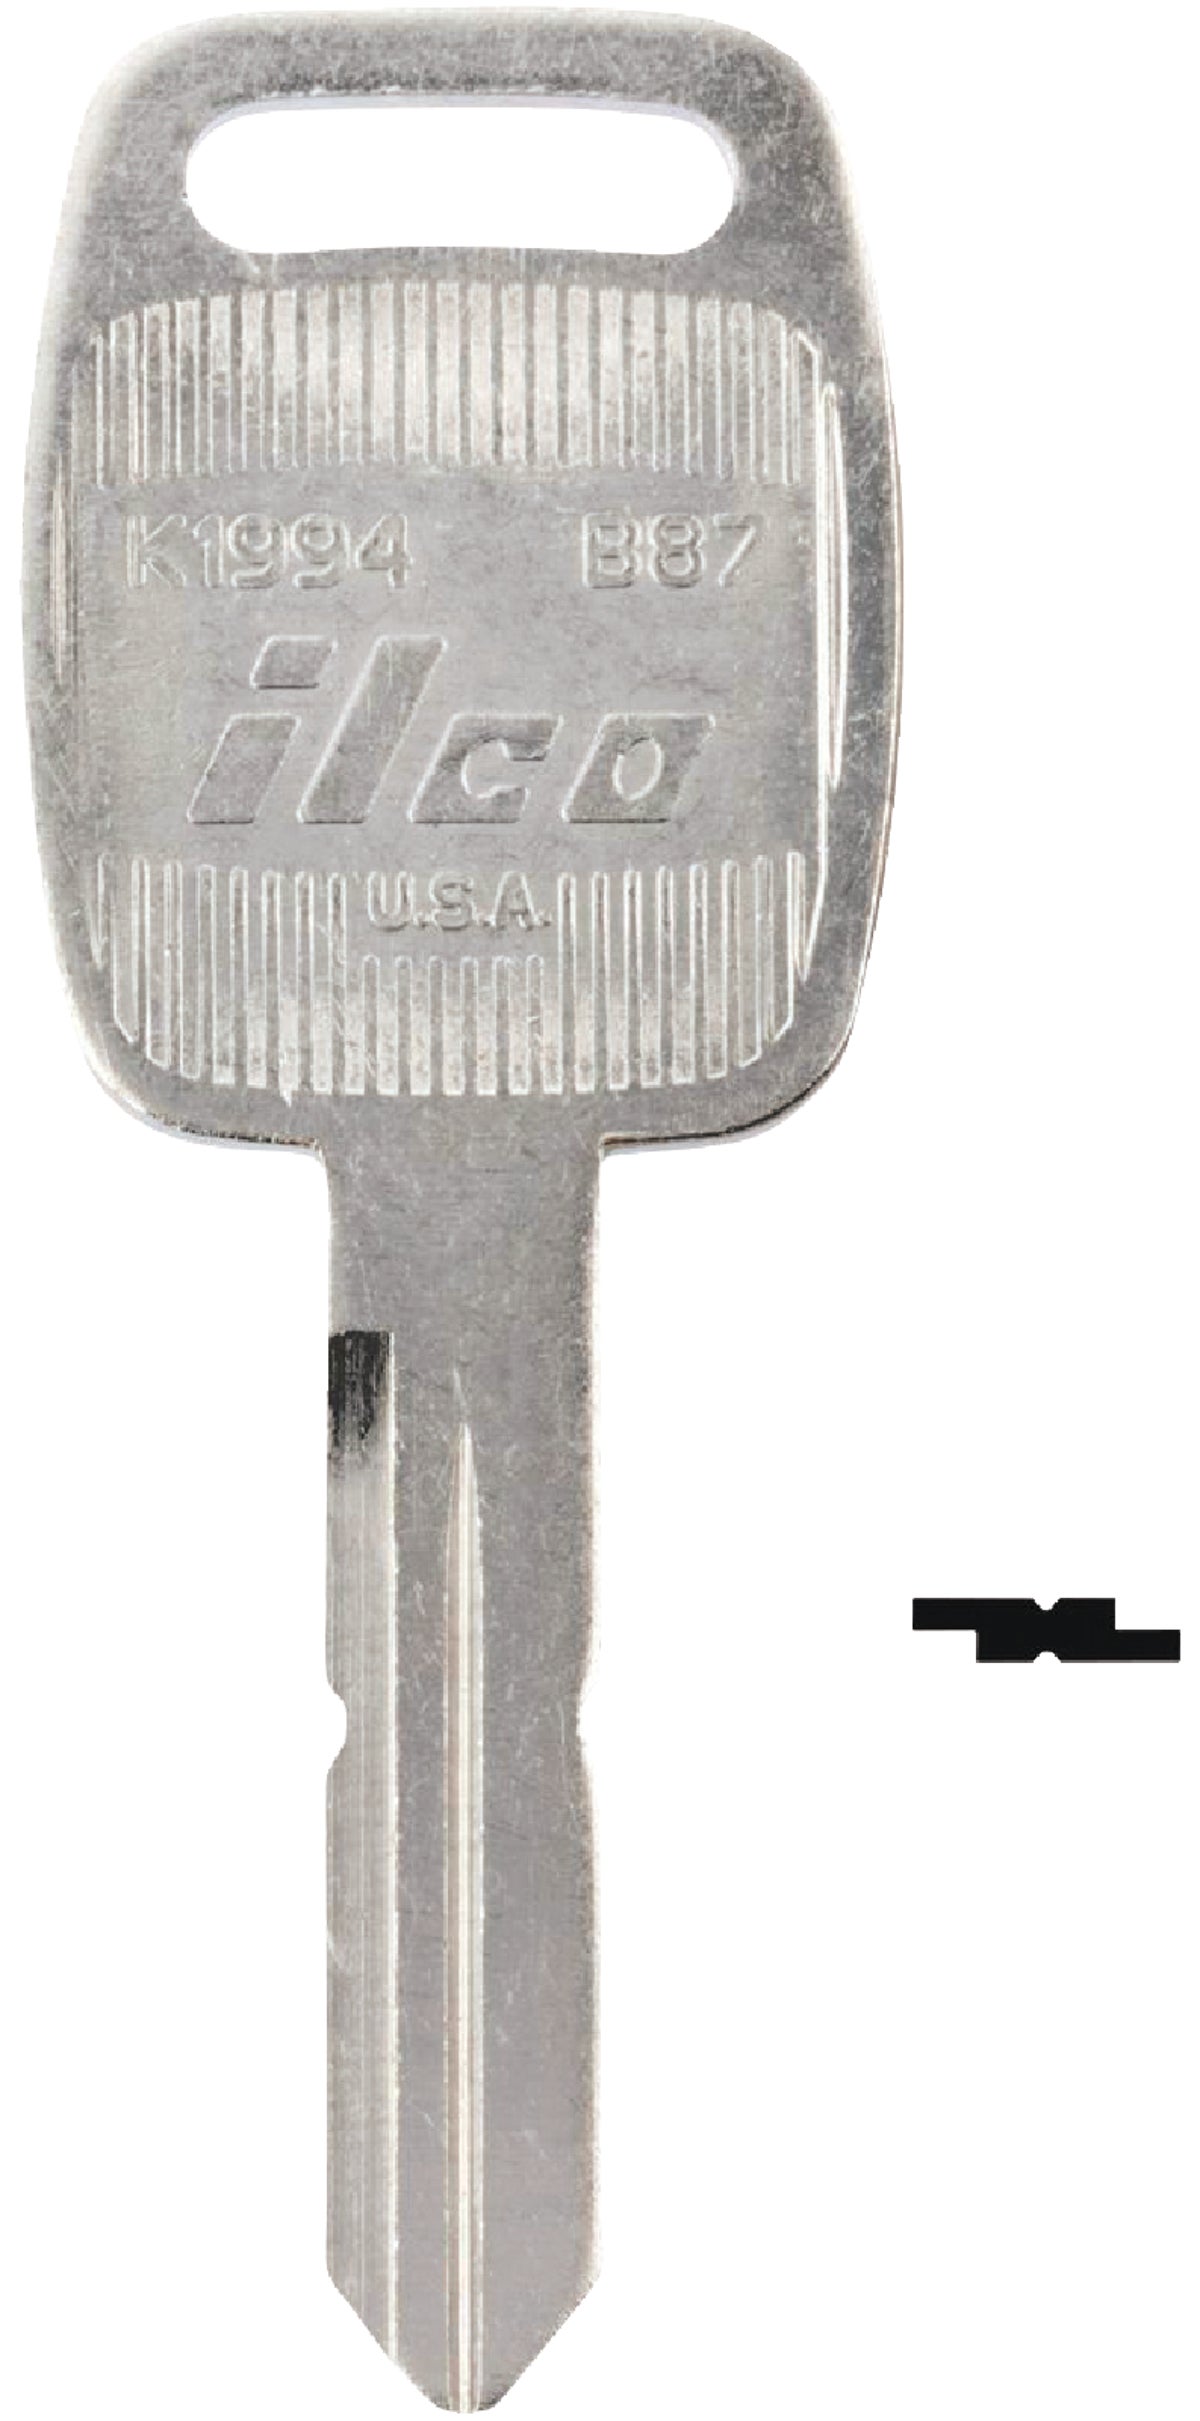 K1994 B87 Kenworth  key blank by Ilco Buy 1 get 1 FREE 